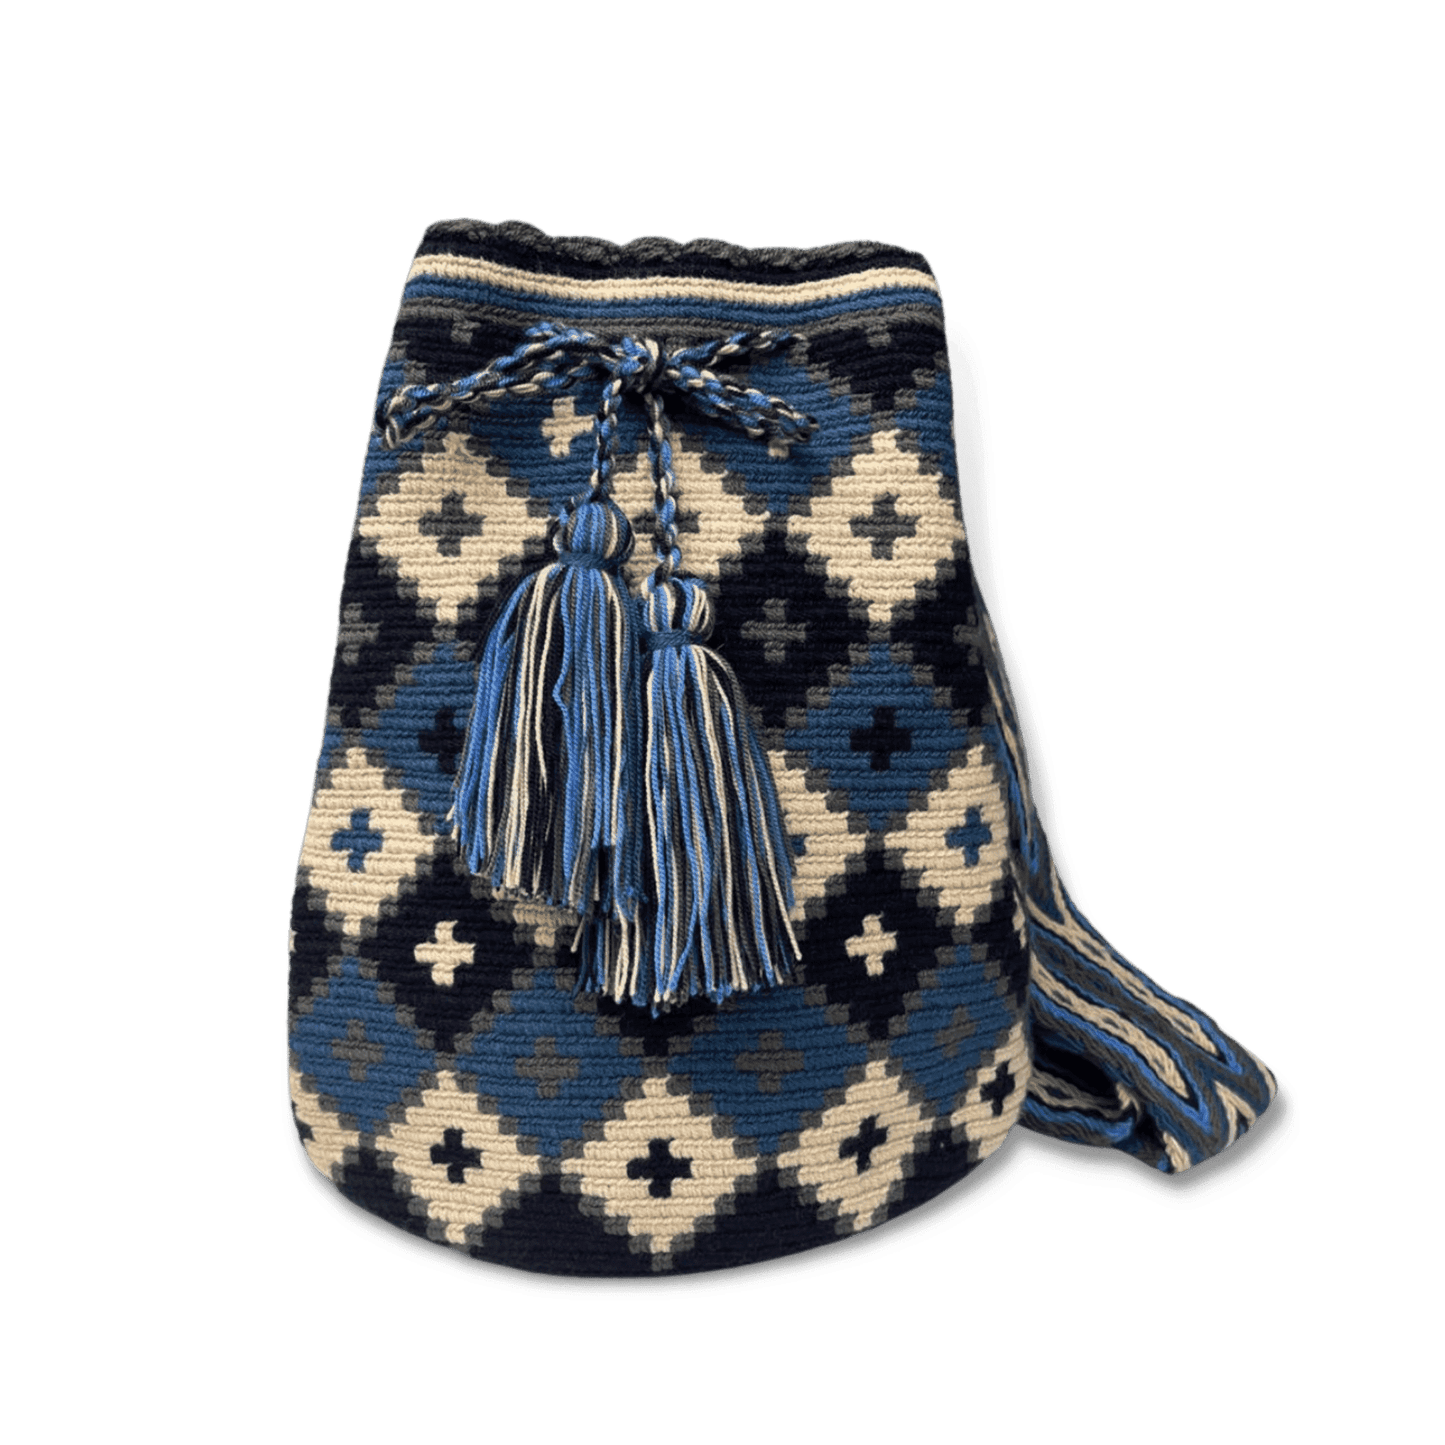 Mochila Wayúu para mujer diseño rombos azules y beige